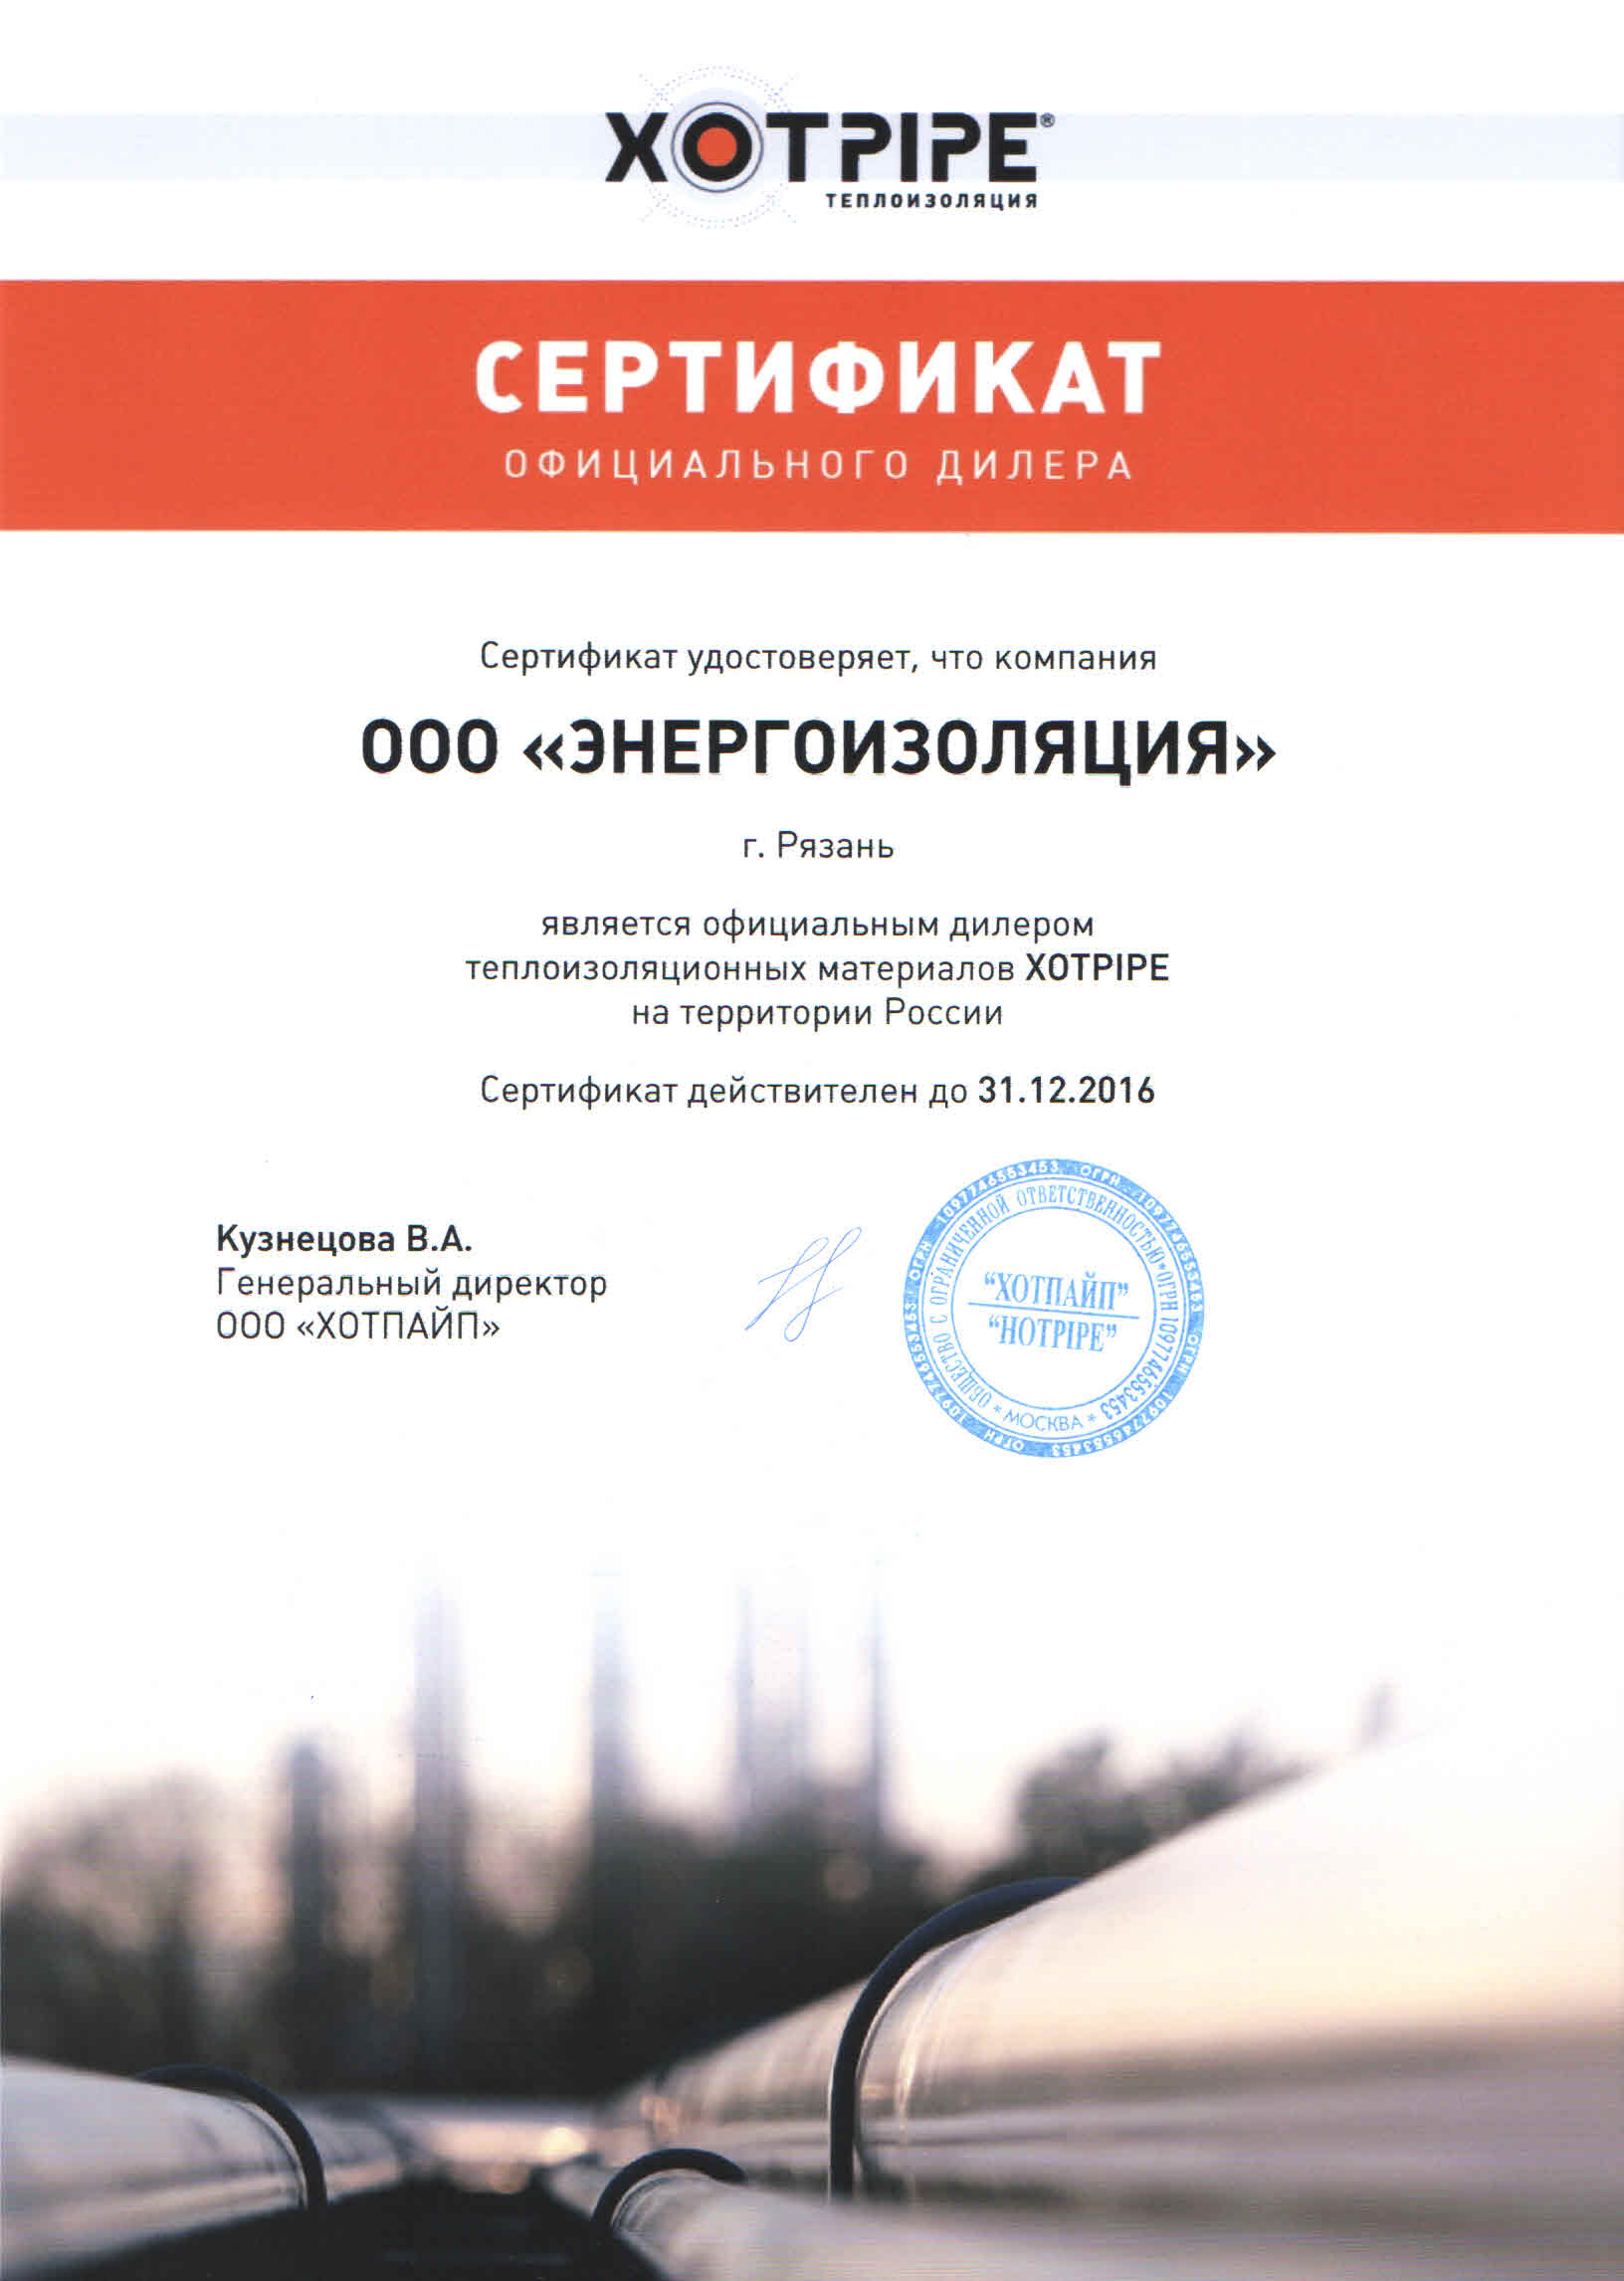 Сертификат дилера ХОТПАЙП - ЭнергоИзоляция